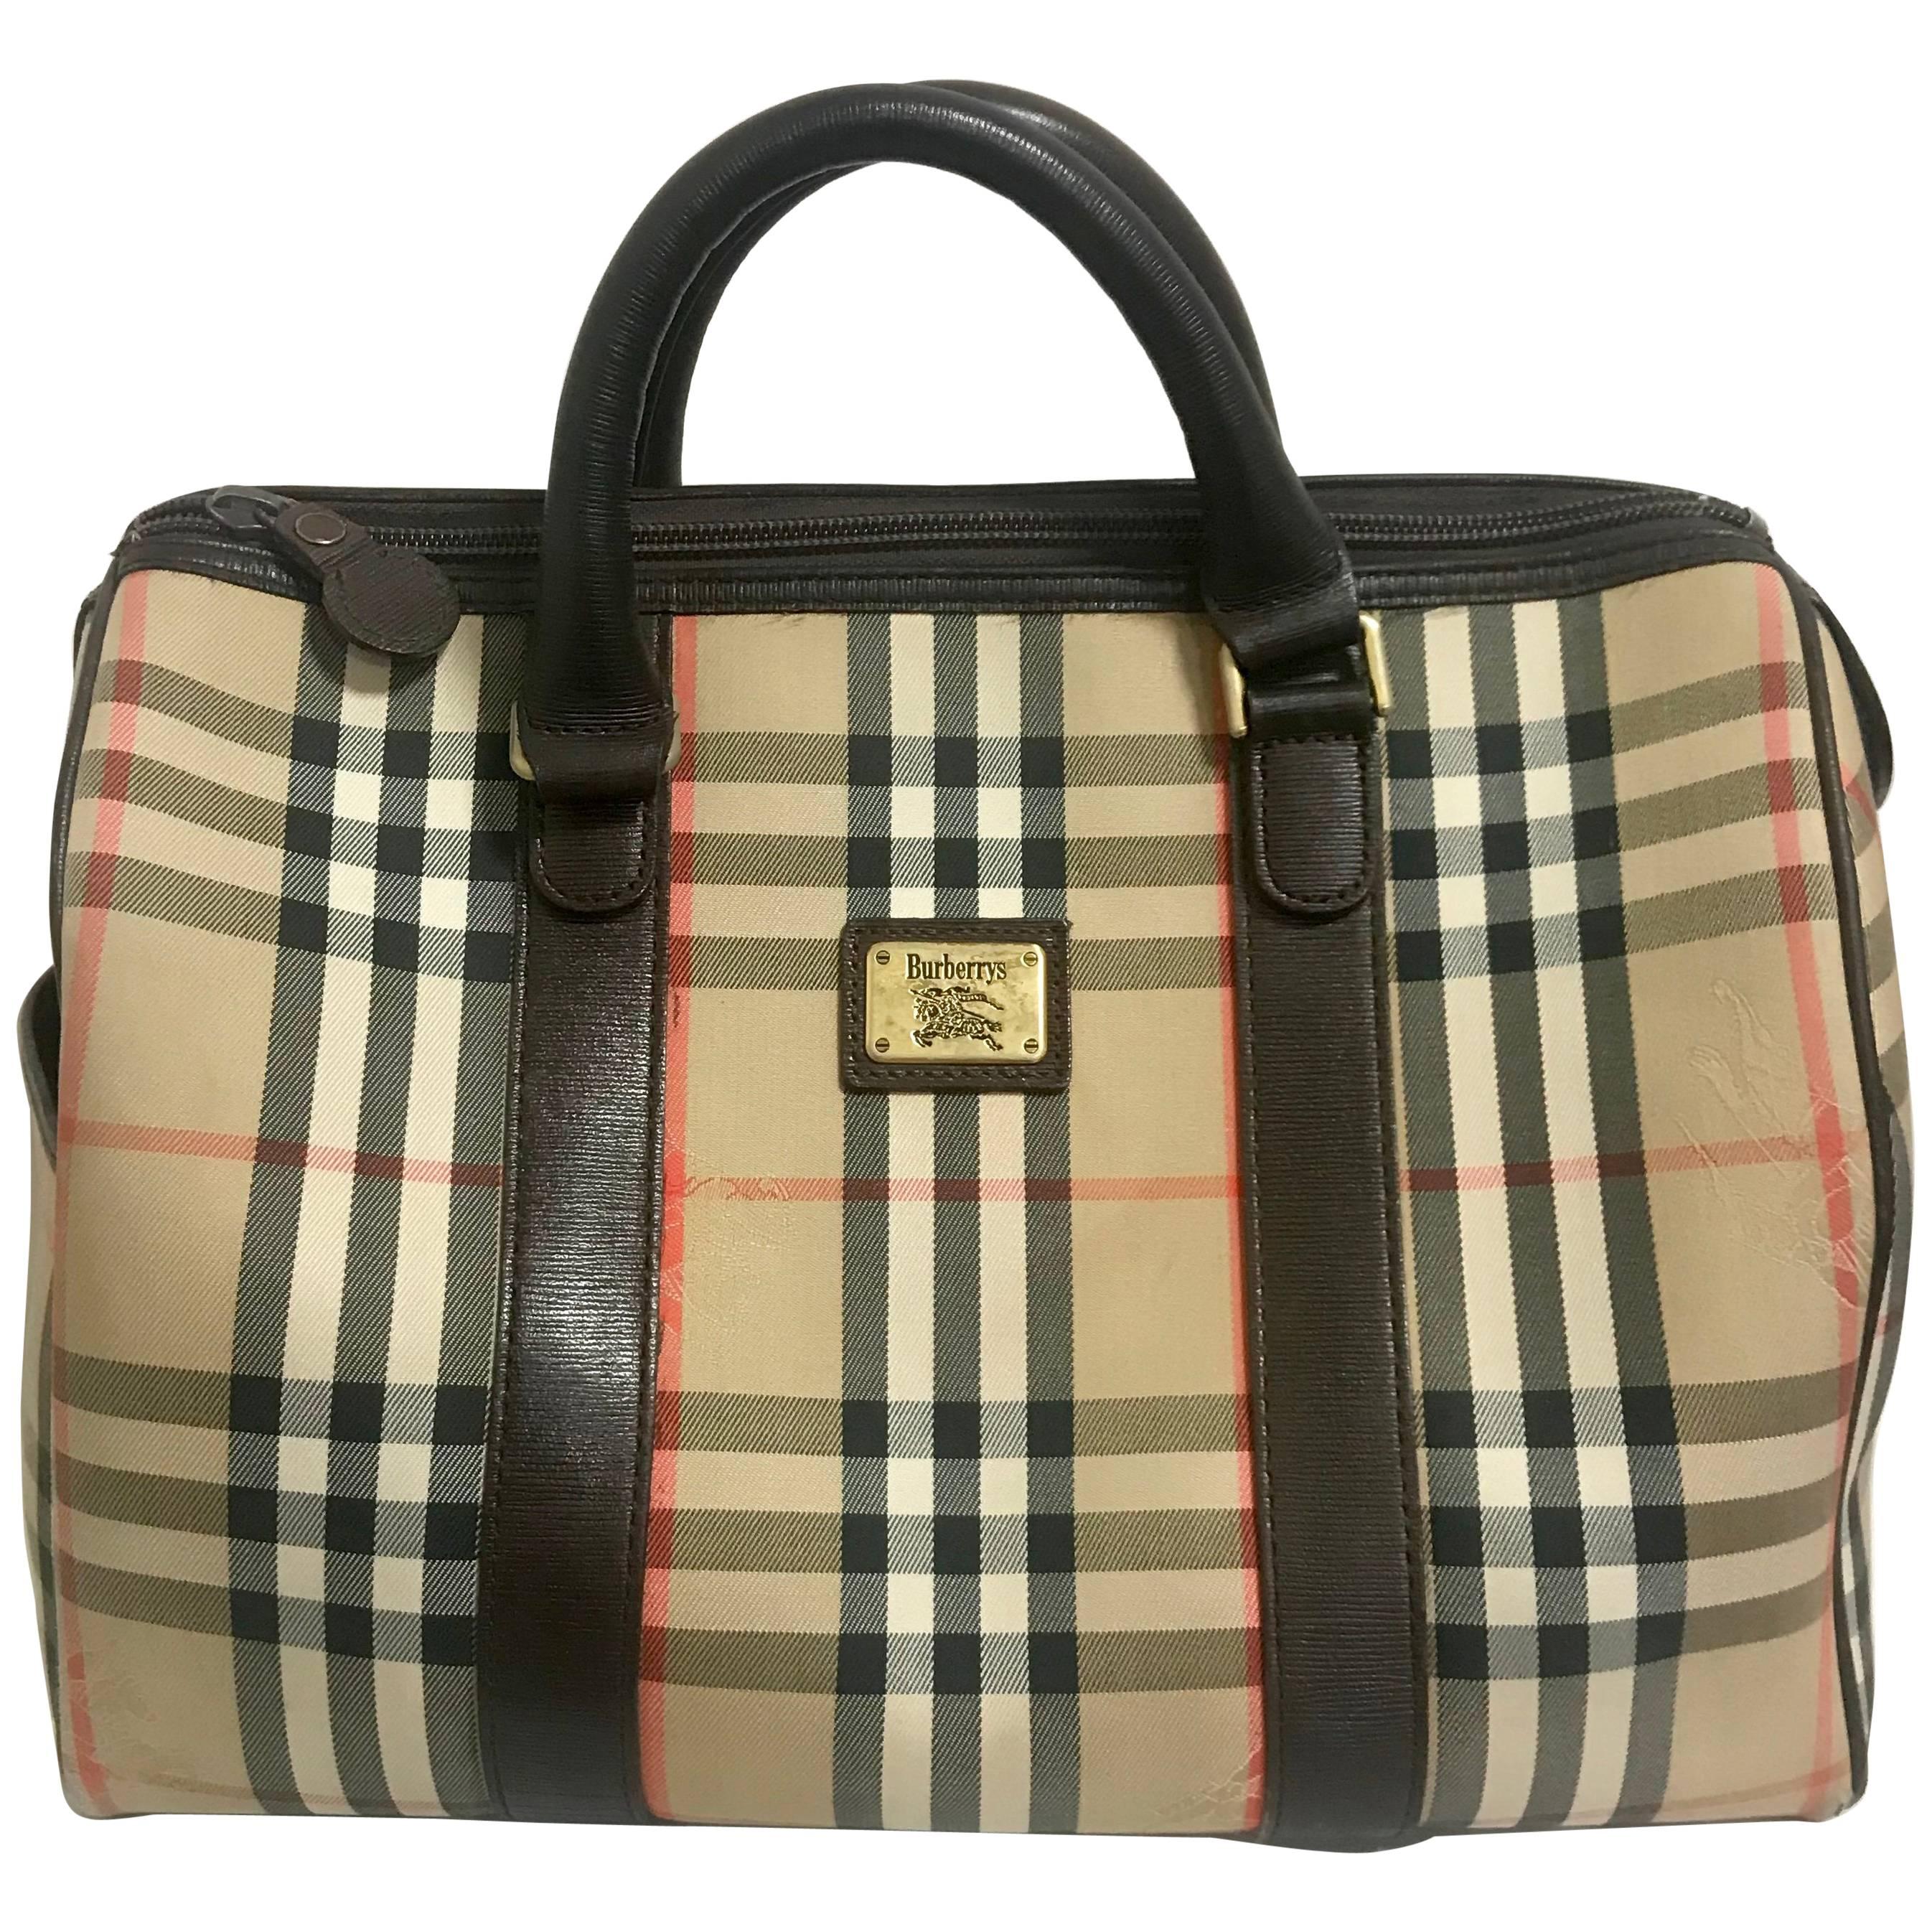 Vintage Burberry classic beige and brown nova check handbag. Unisex purse. For Sale